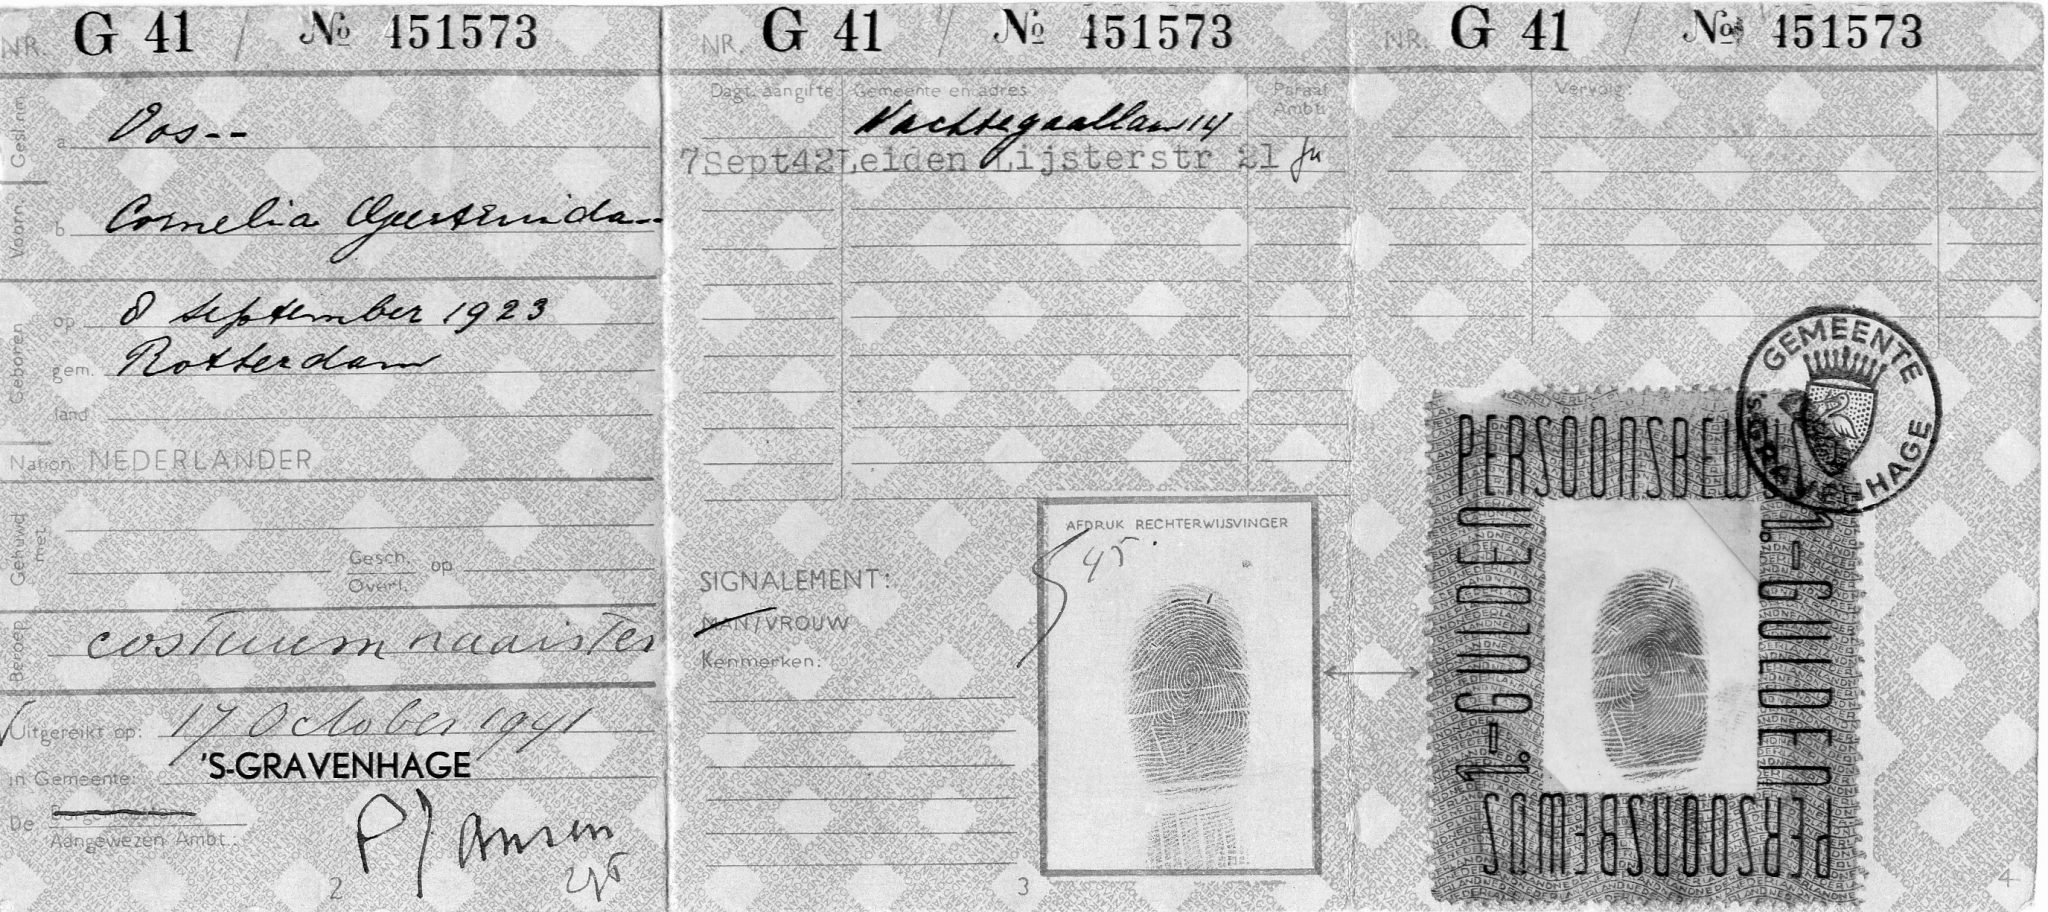 Inside fake ID for Elizabeth Gompert (Schneider)